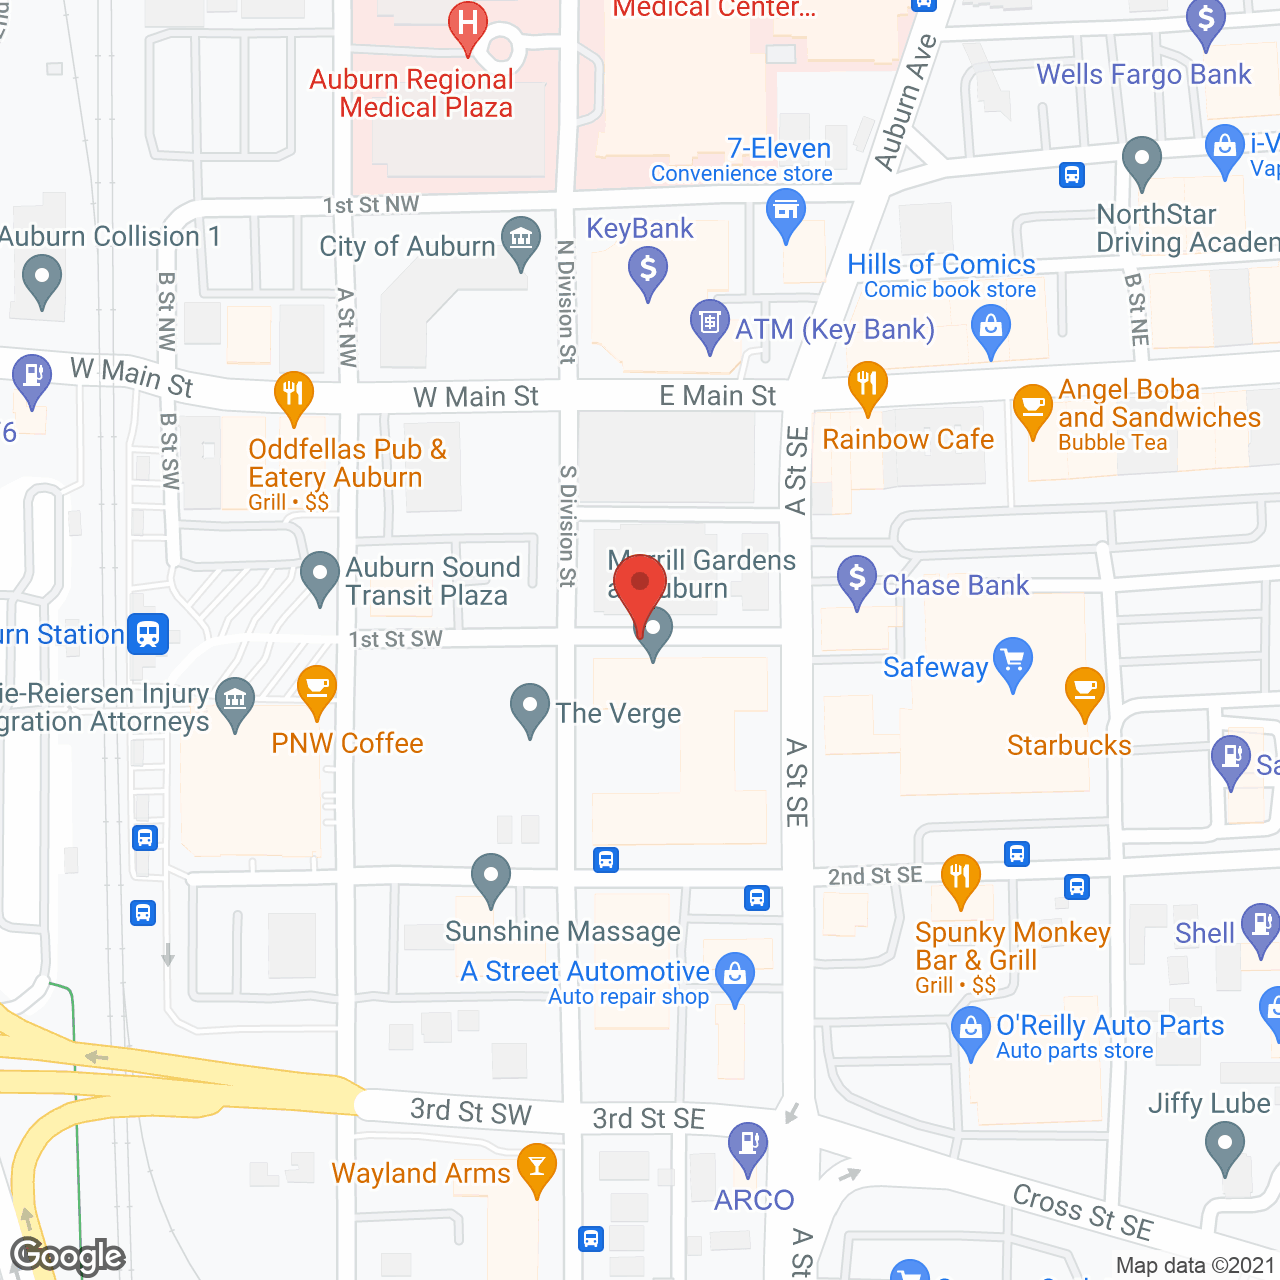 Merrill Gardens at Auburn in google map